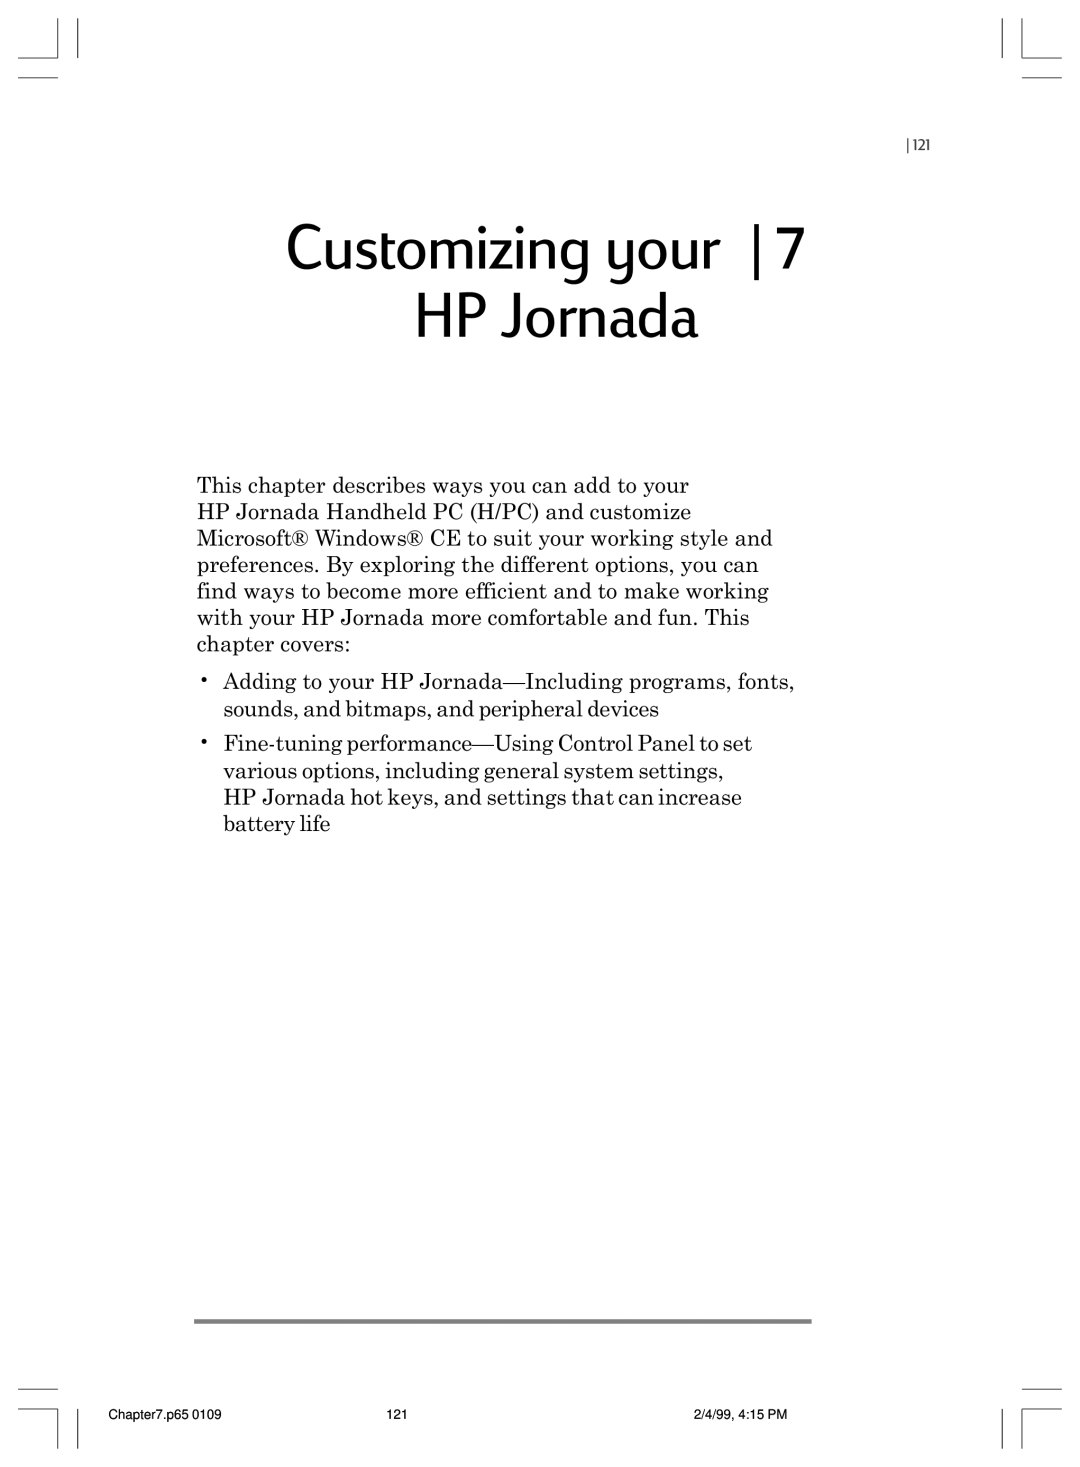 HP 820 E manual Customizing your HP Jornada, p65, 2/4/99, 415 PM 